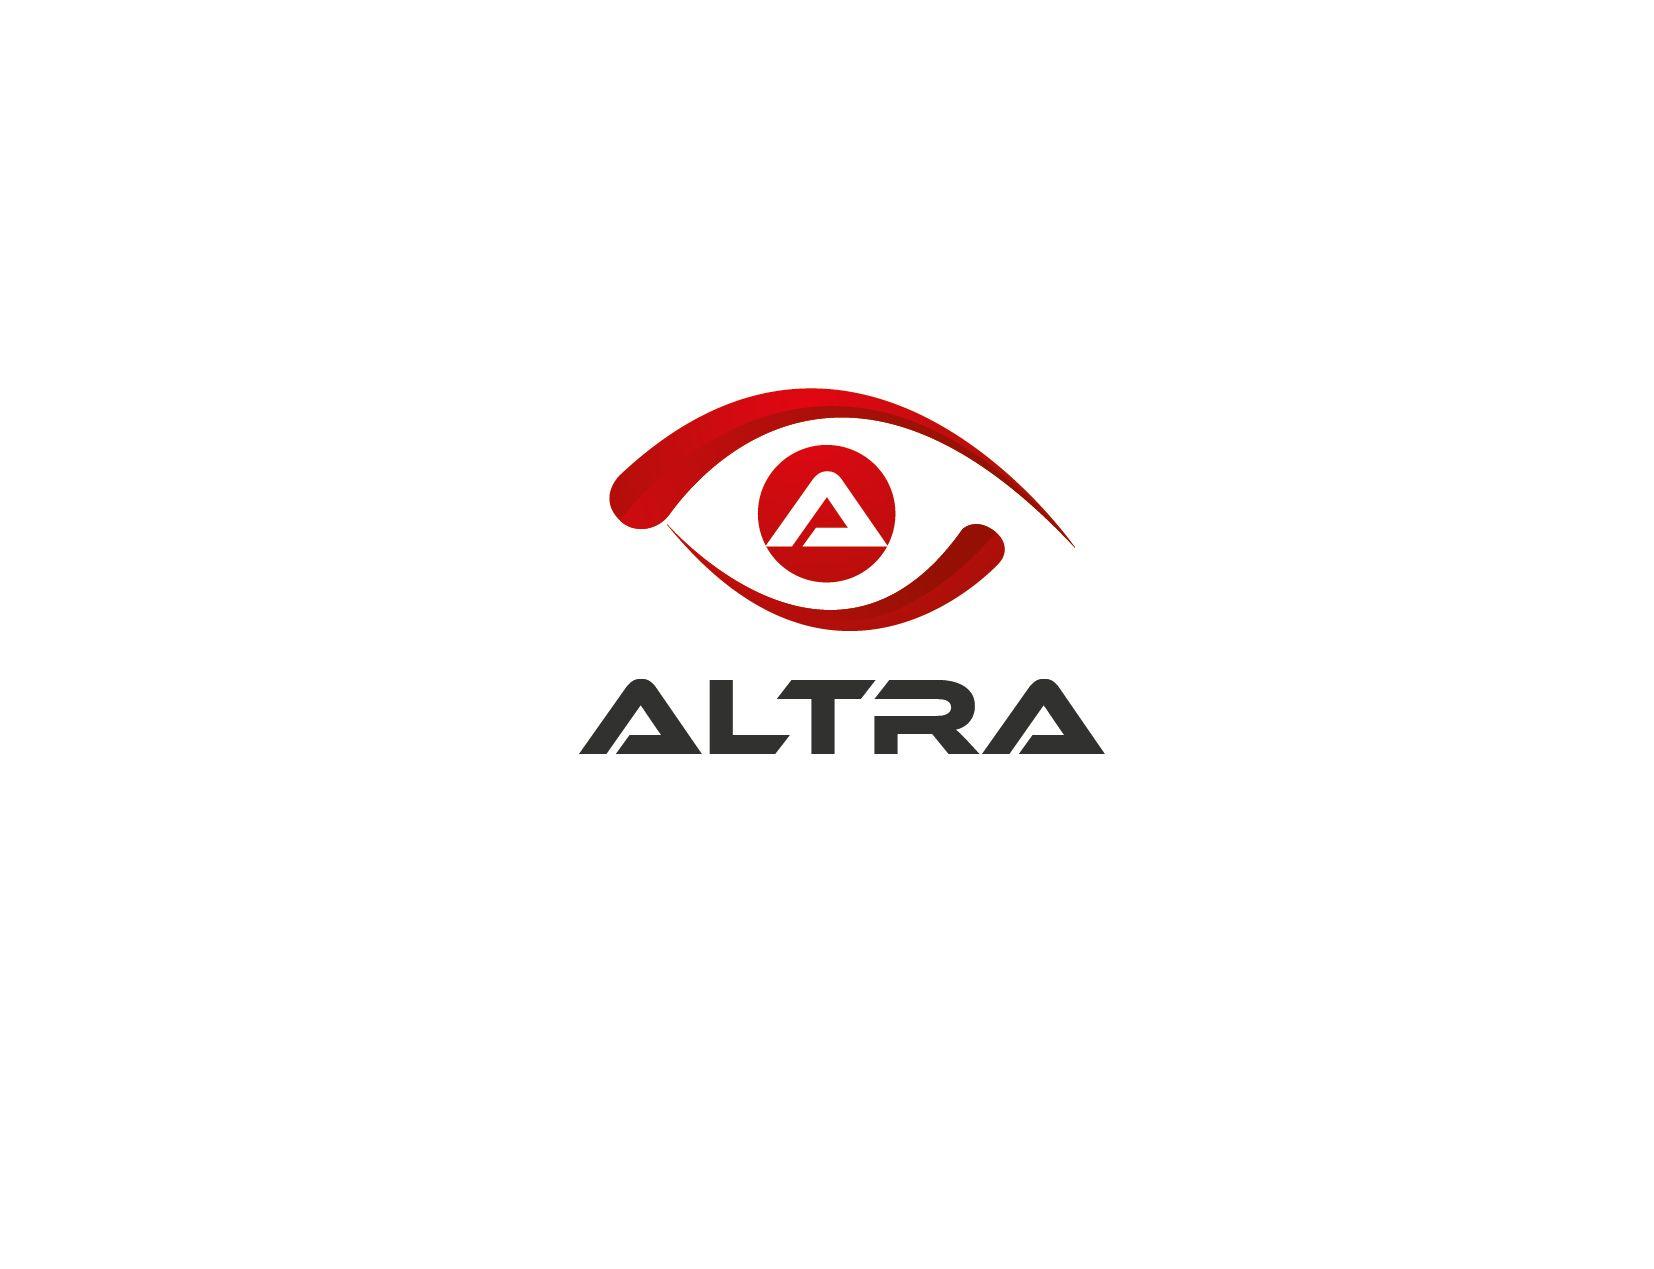 Altra Logo - Gallery. Desain Logo Untuk ALTRA